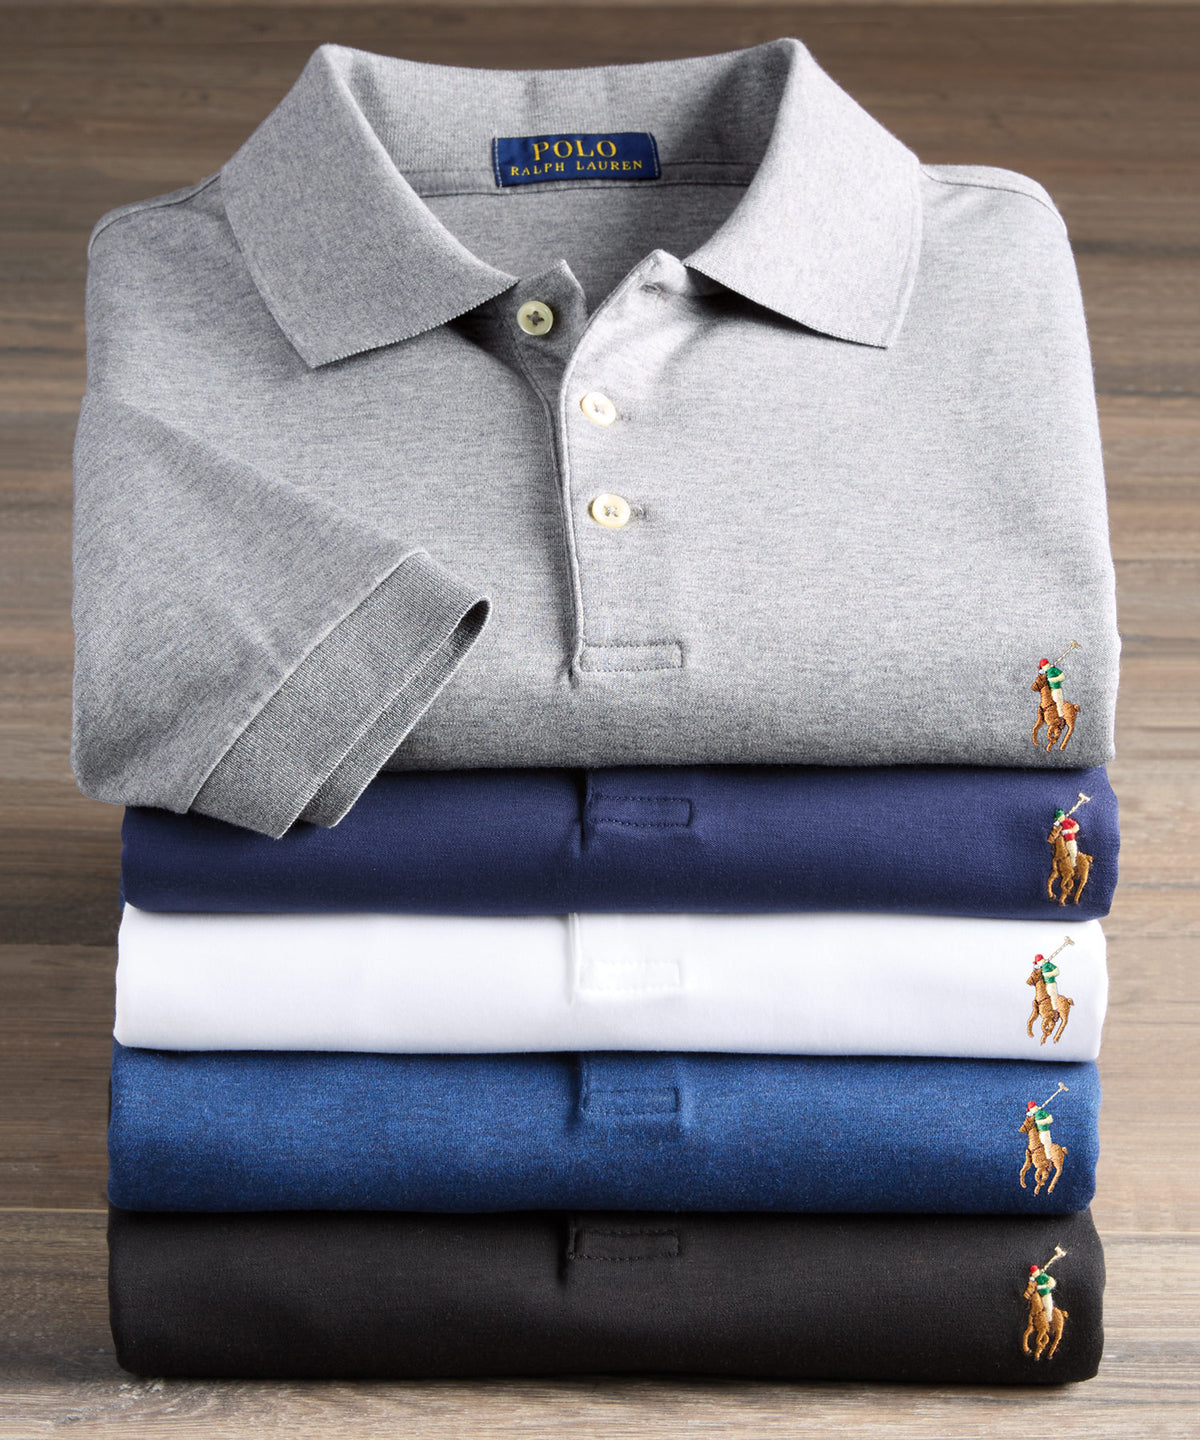 Polo Ralph Short Sleeve Classic Fit Soft Cotton Polo Shirt - Westport Big Tall